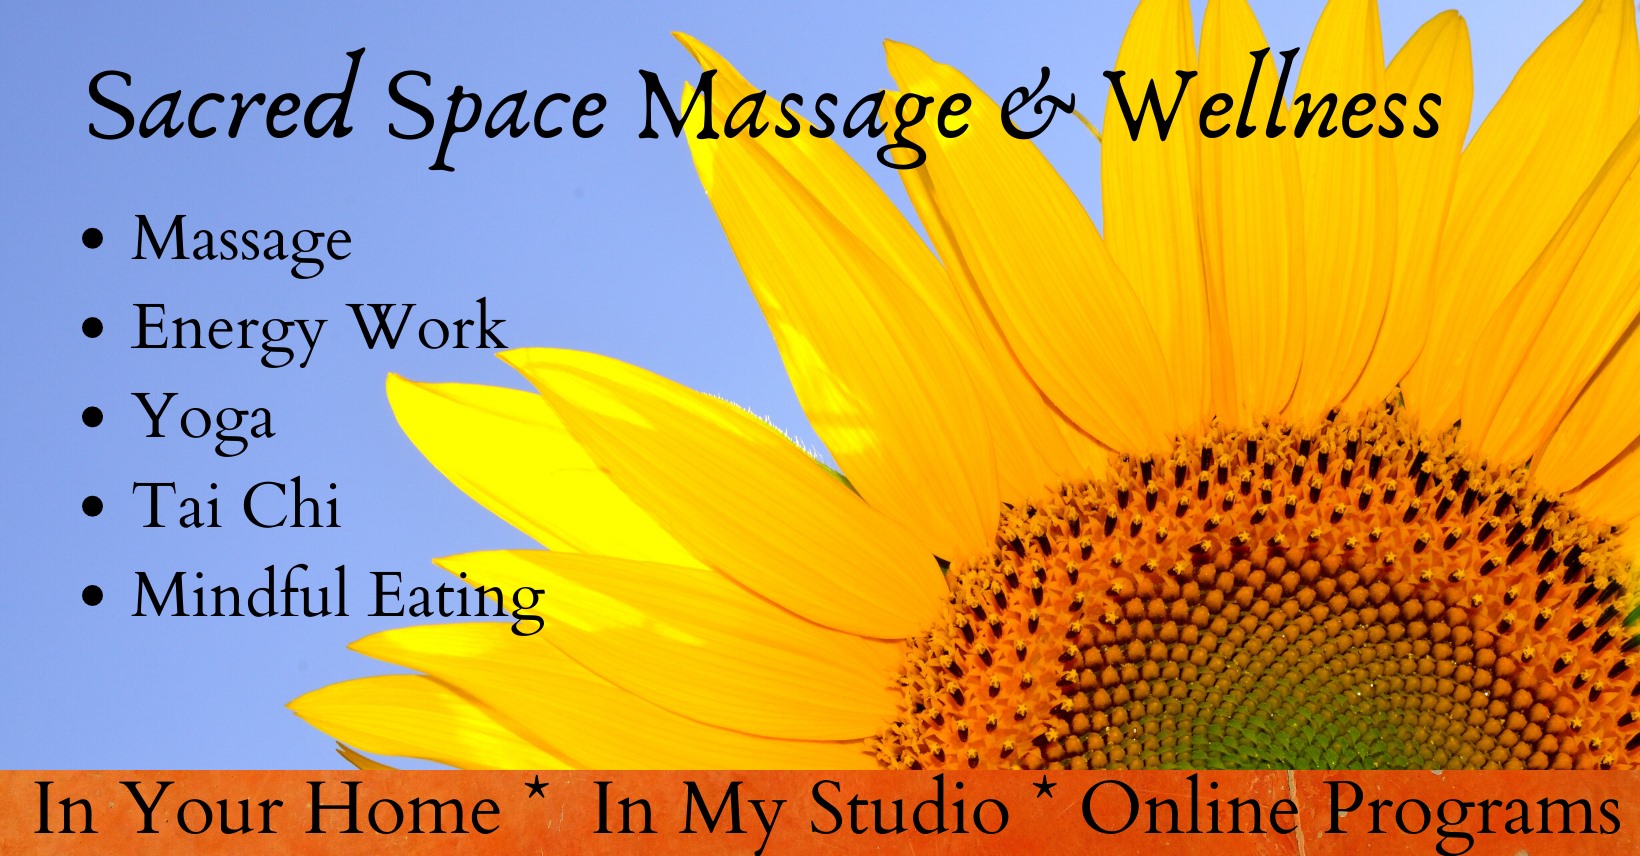 Sacred Space Massage & Wellness 336 Bush St, Greenville California 95947